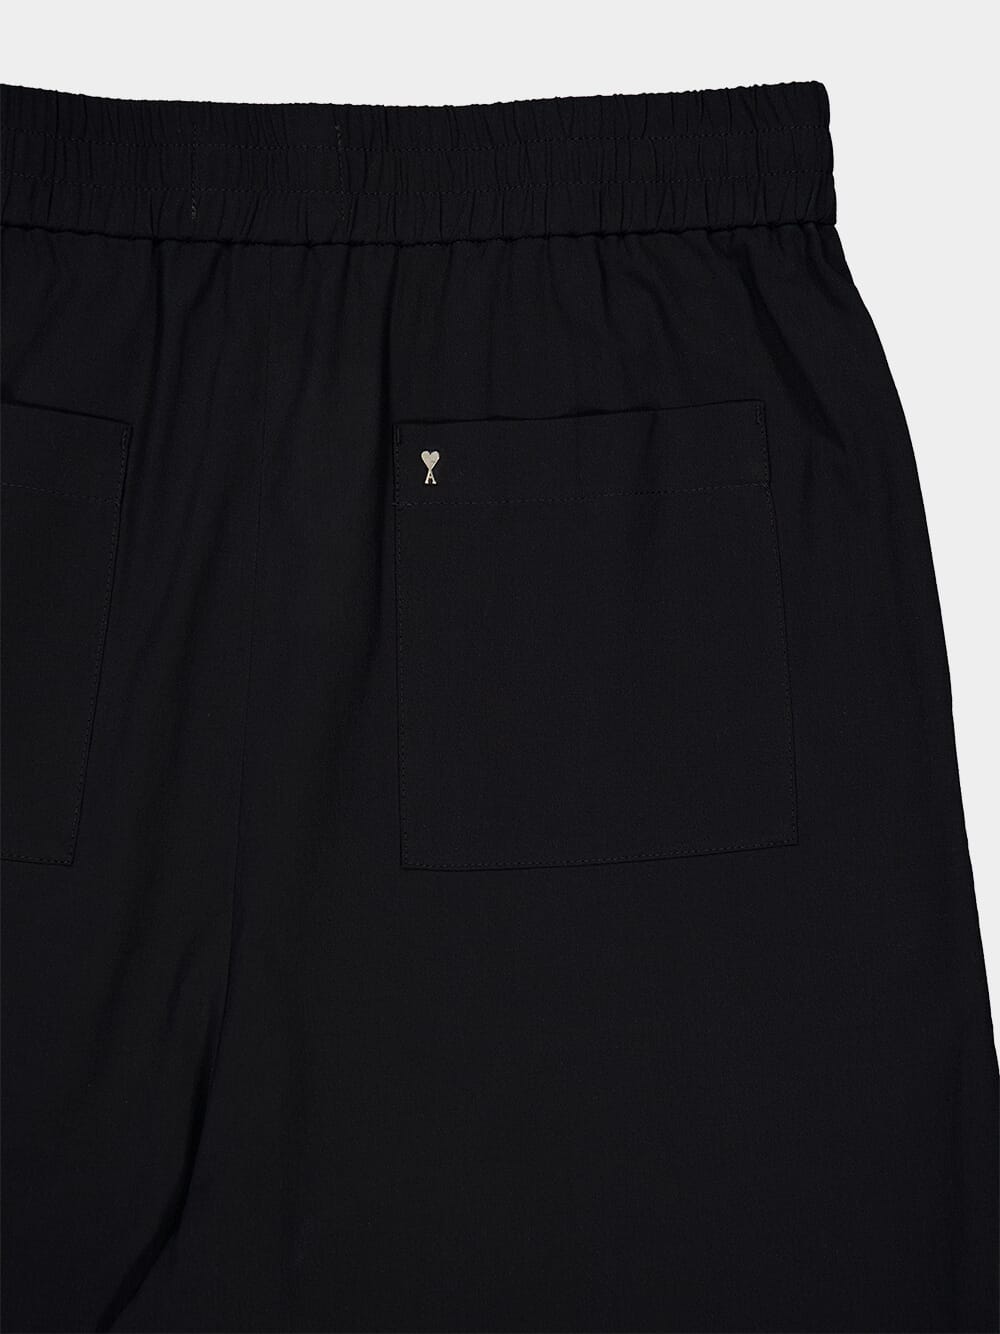 Elasticated Waist Black Bermuda Shorts